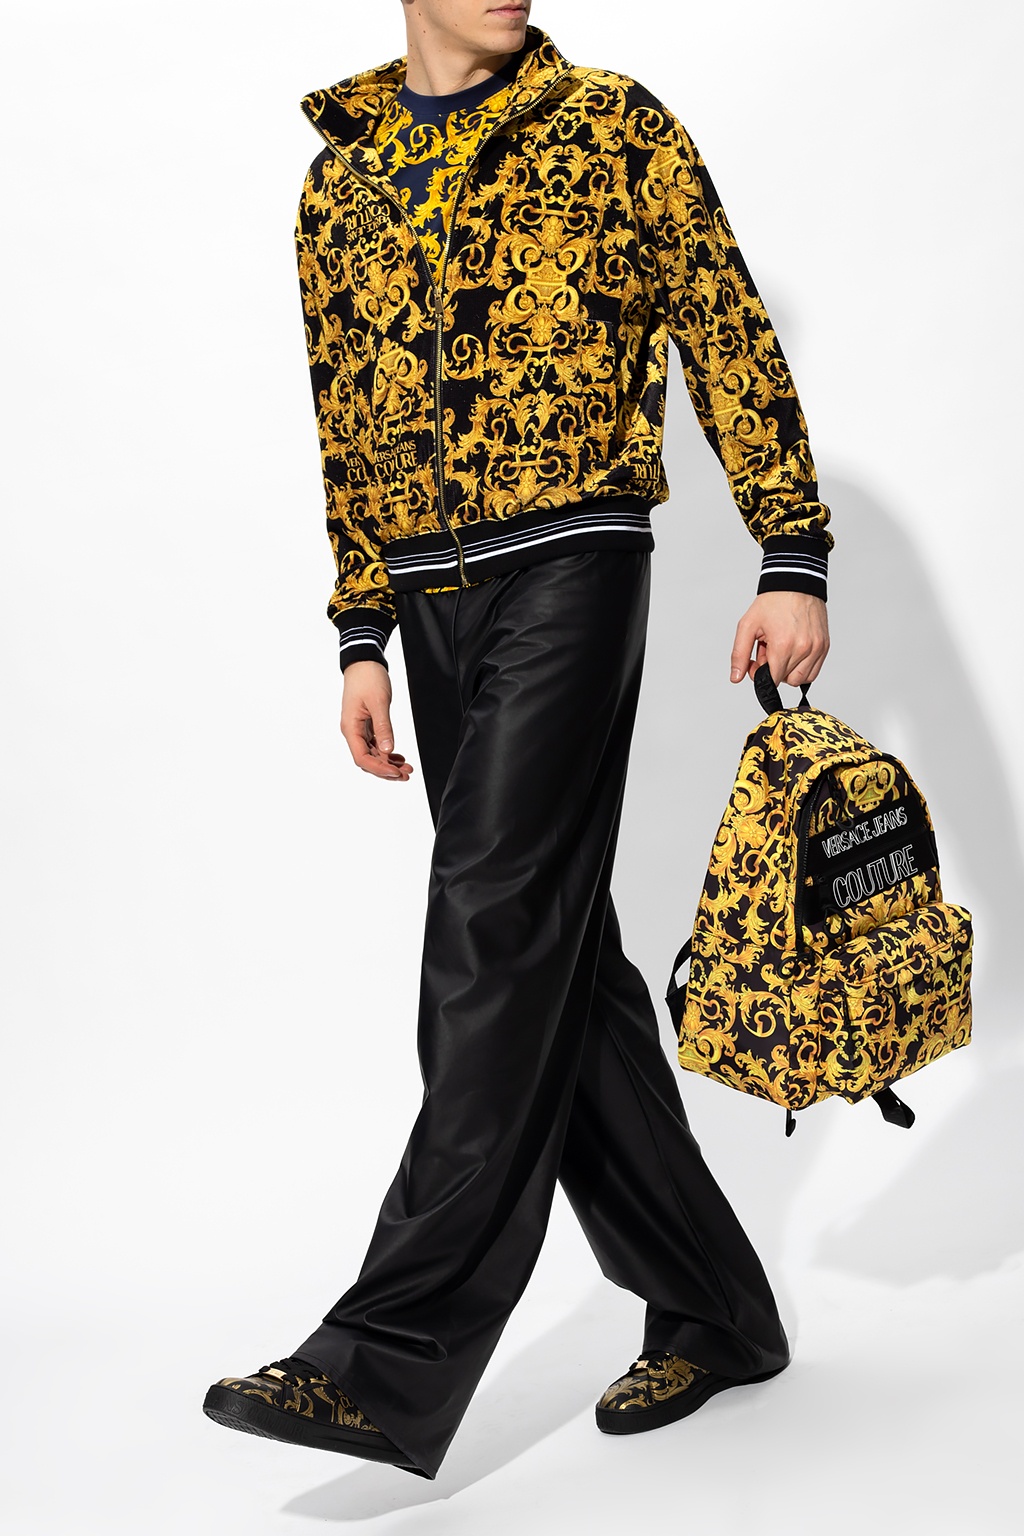 Versace Jeans Patterned sweatshirt Men's Clothing | Vitkac